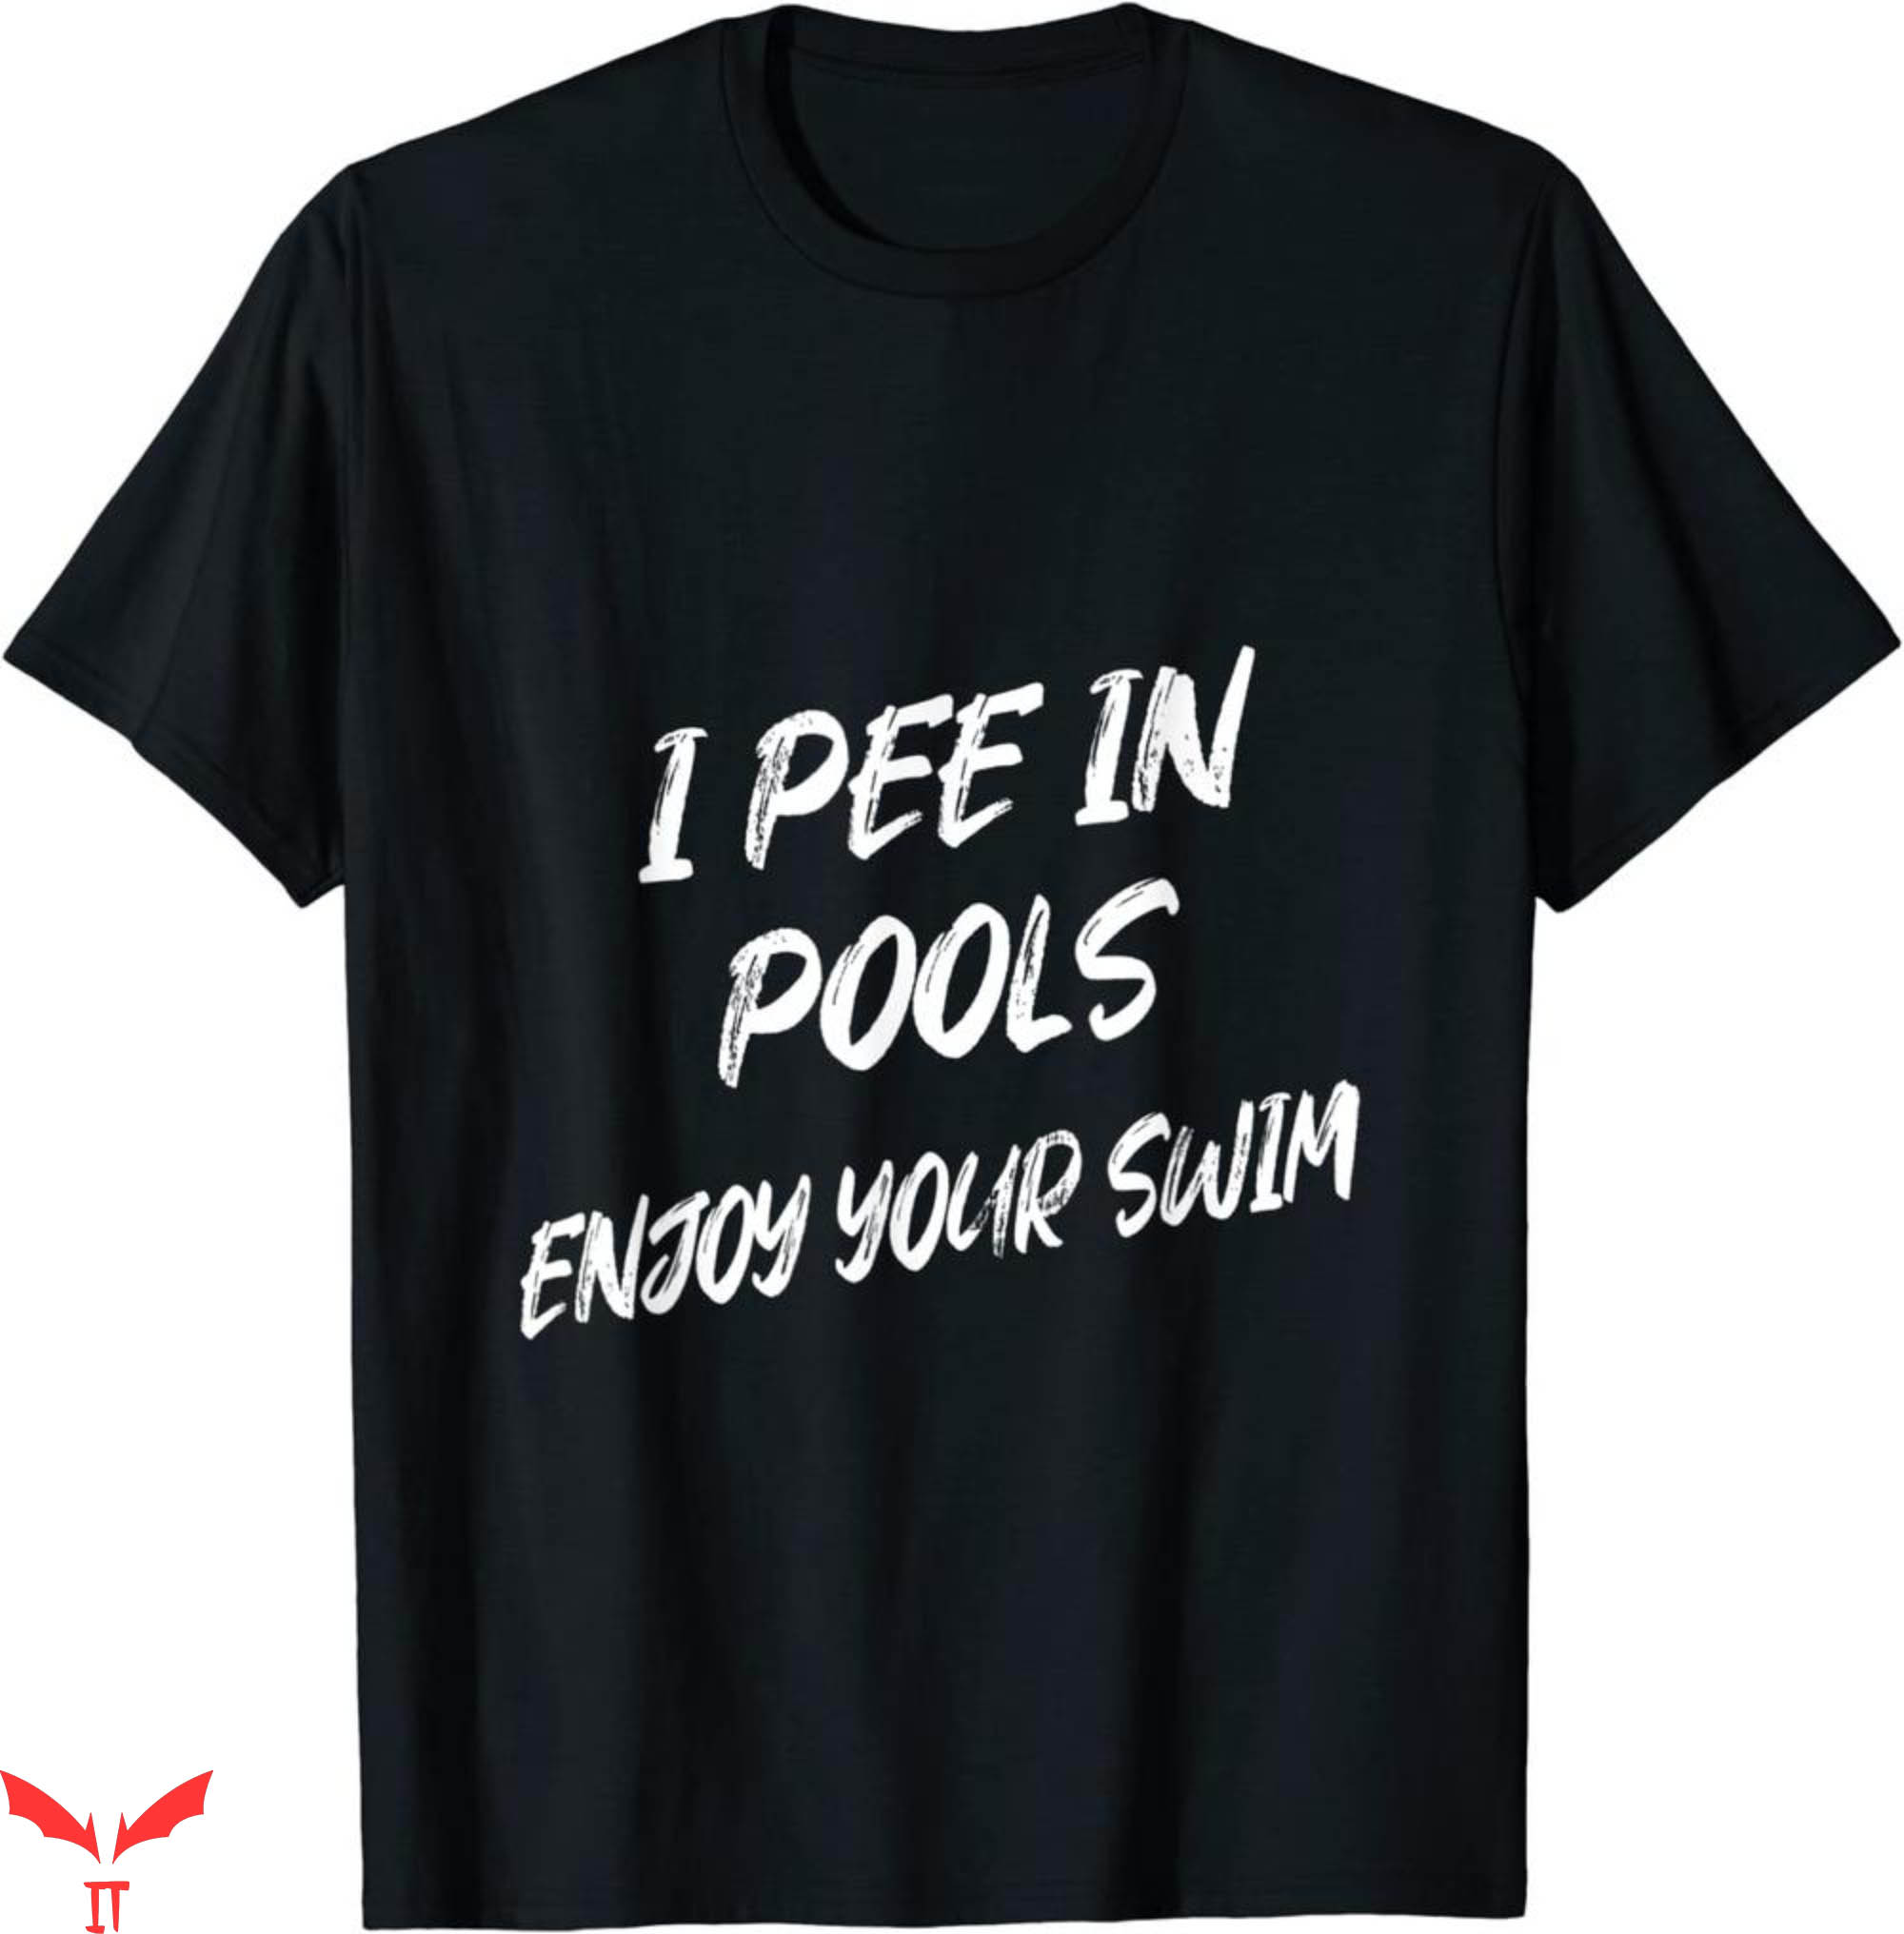 I Pee In Pools T-Shirt Enjoy Your Swim Funny Humorous Trendy